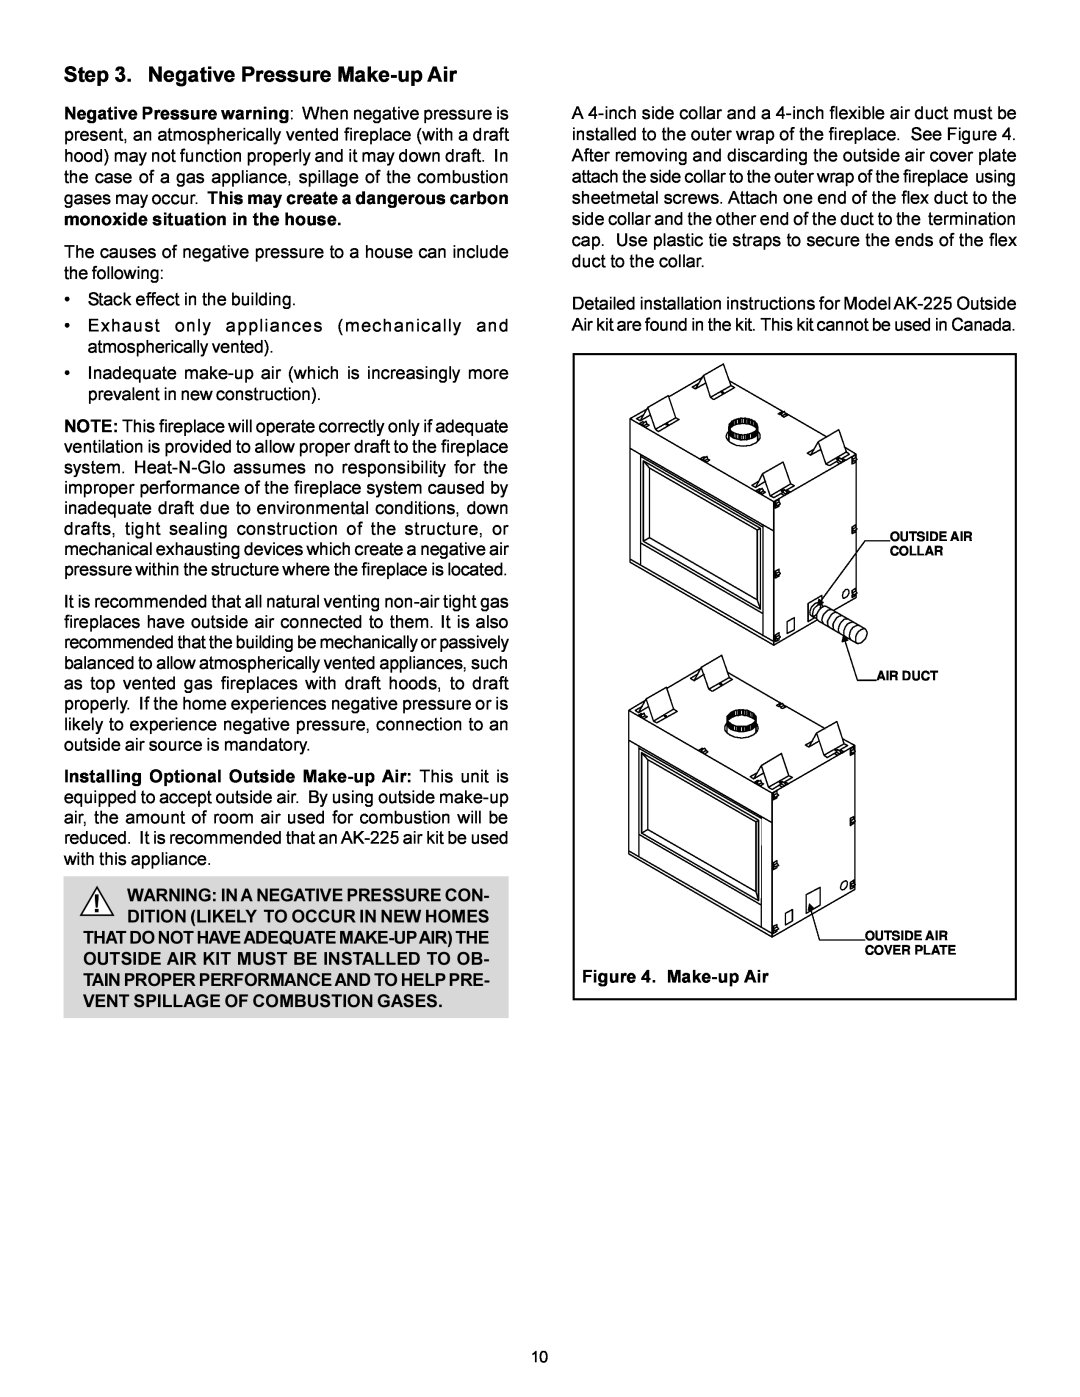 Heat & Glo LifeStyle ST-38GTV manual Negative Pressure Make-upAir 